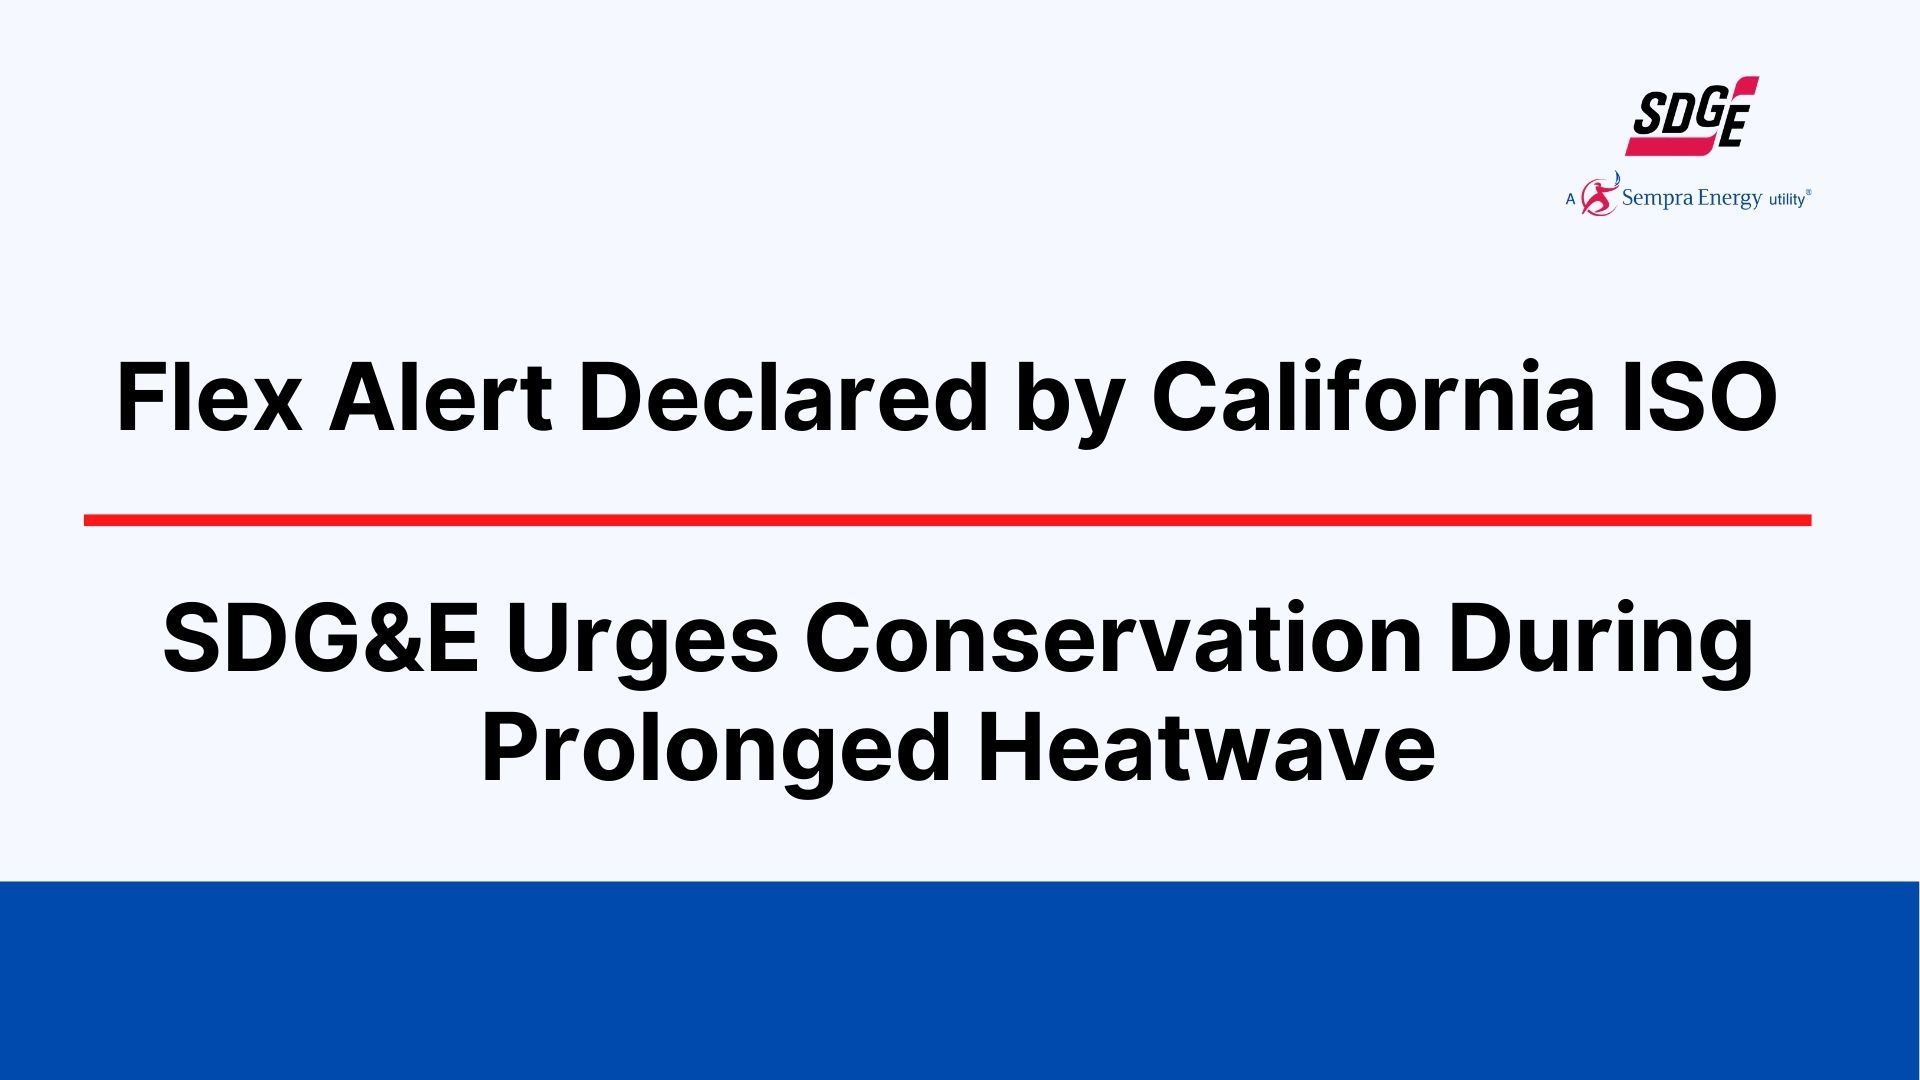 Aug. 16 Flex Alert Declared by California ISO SDGE San Diego Gas